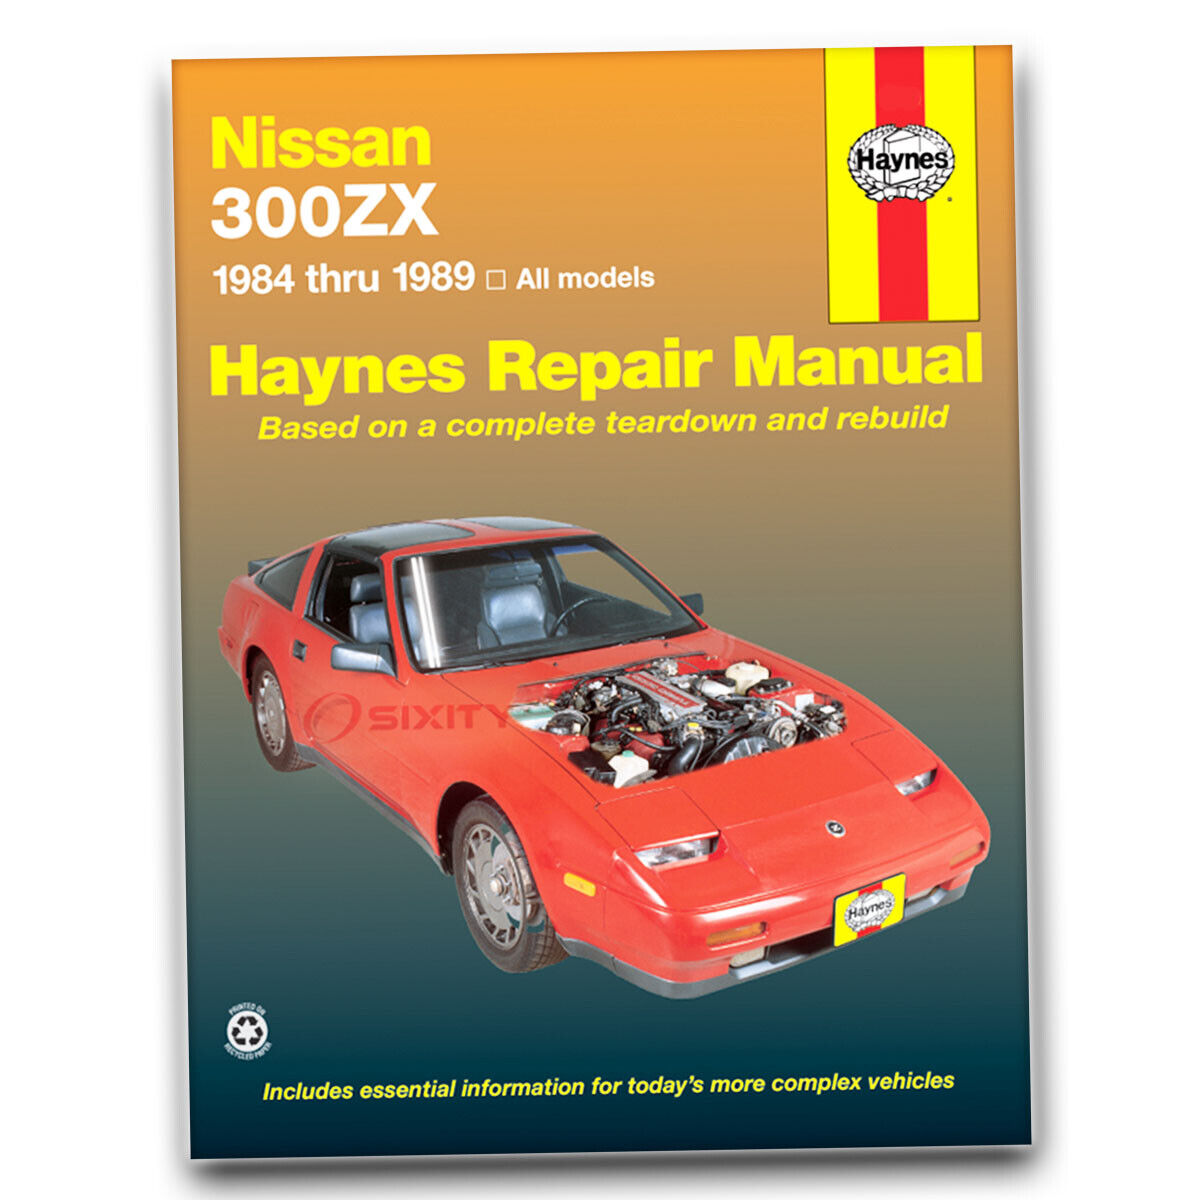 Haynes Repair Manual for 1984-1989 Nissan 300ZX - Shop Service Garage Book ar